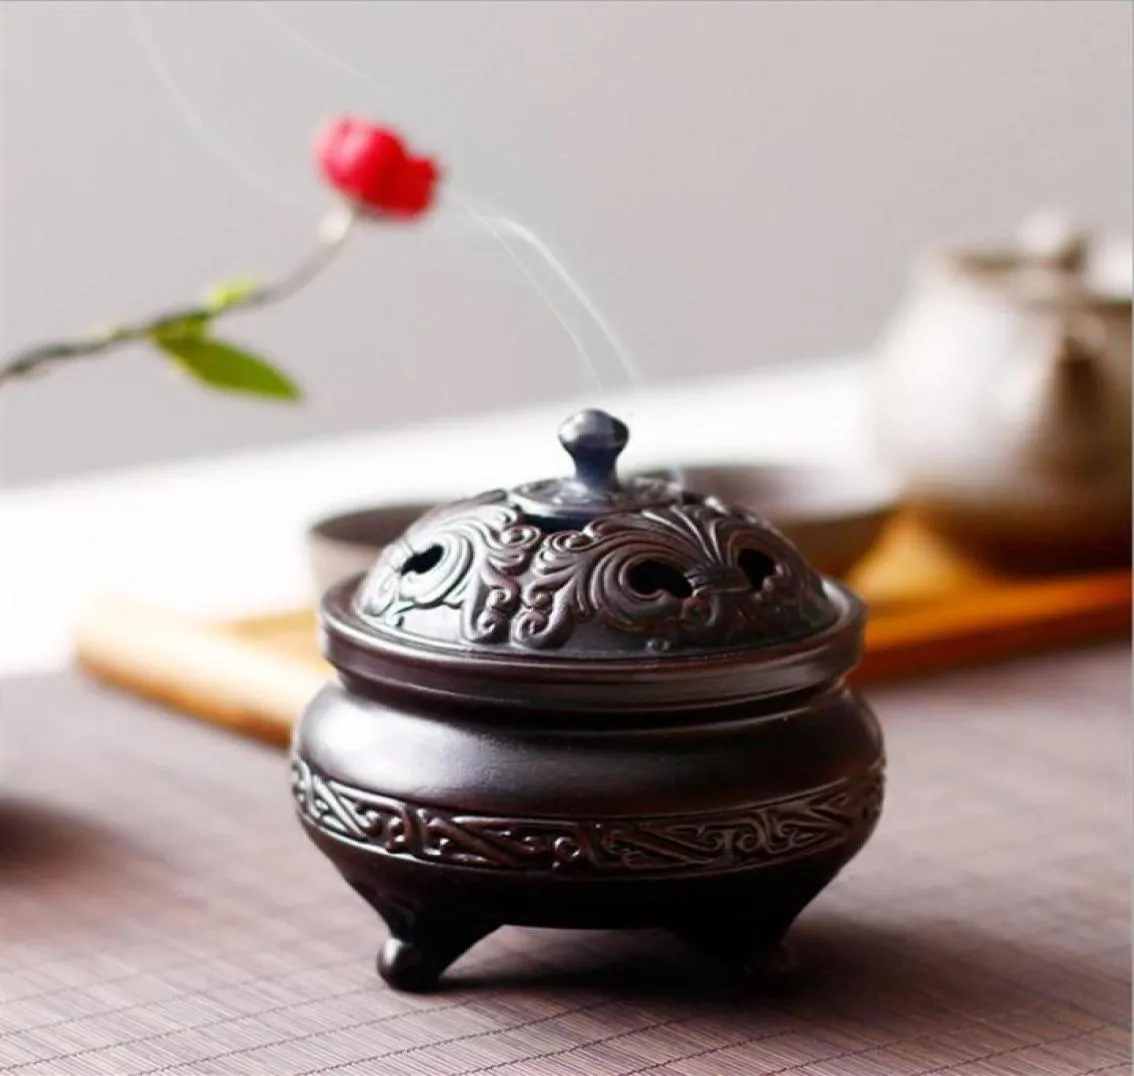 Antique Tea Ceremony Sandalwood Furnace Ceramic Coil Incense Burner Tea Pet Decoration for Space Home Indoor Aromatherapy301L8454539